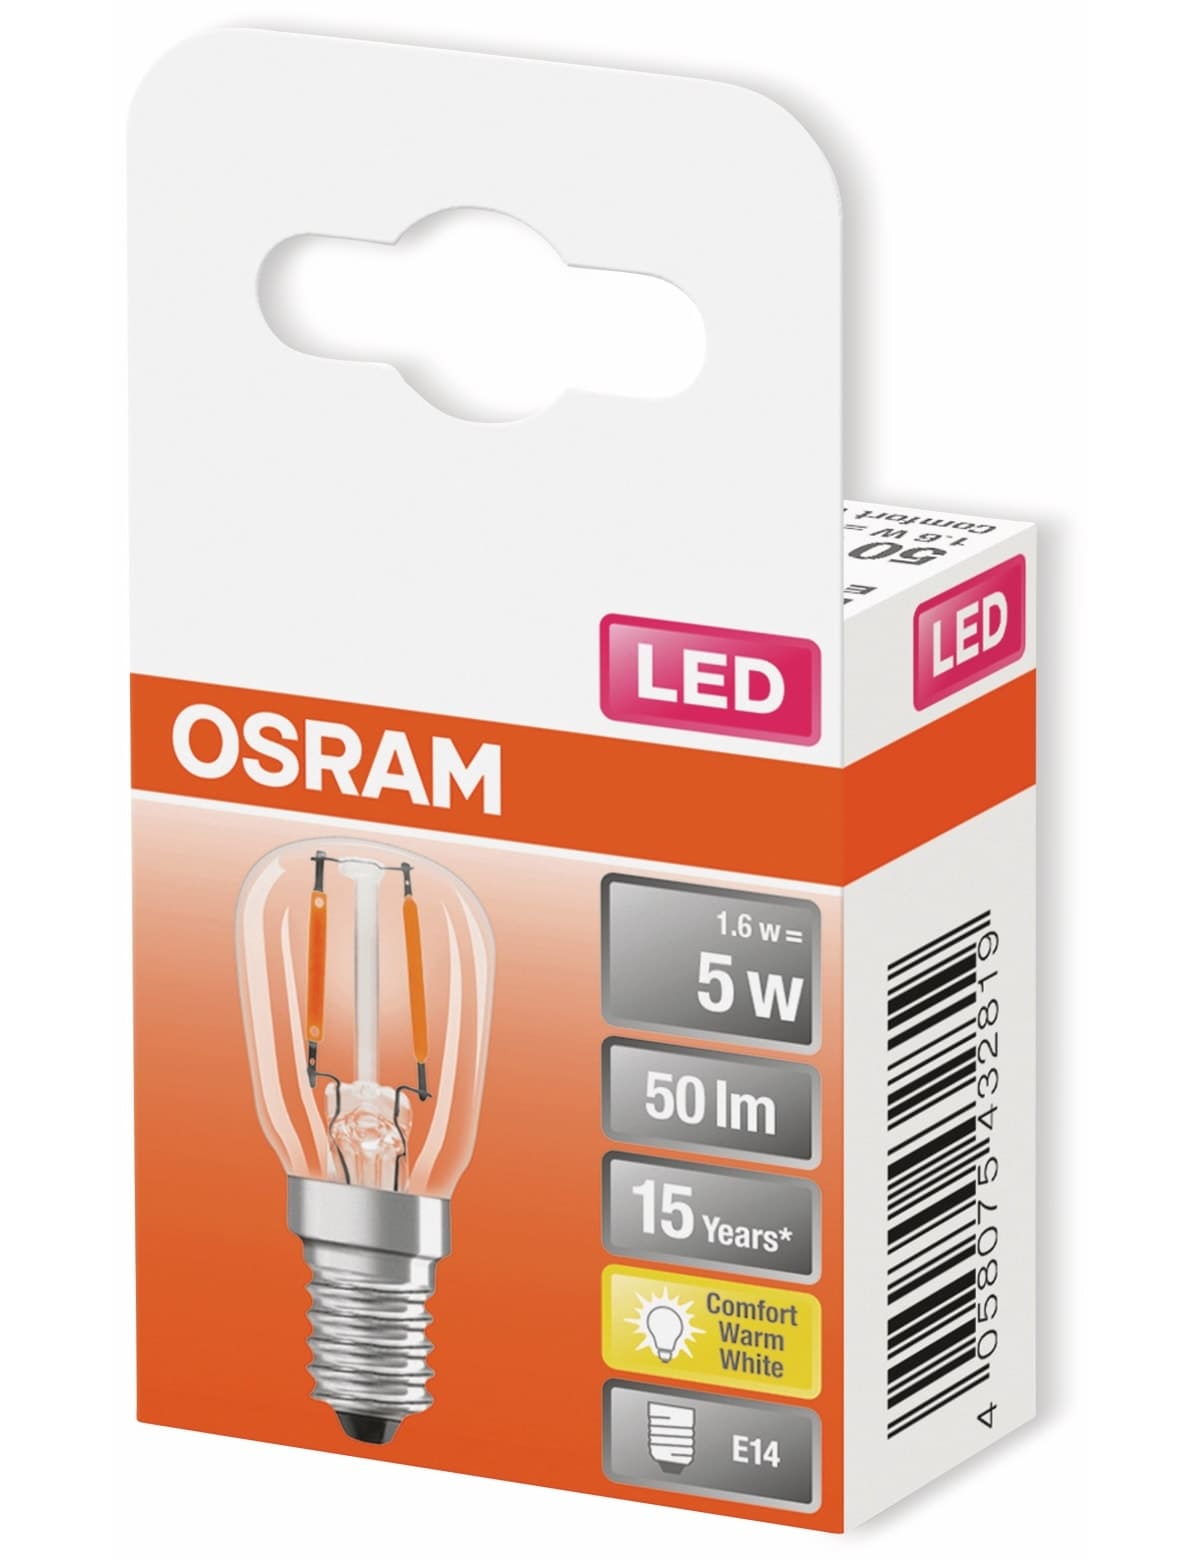 OSRAM LED-Lampe, E14, 1,6 W, 50 lm, 2400 K